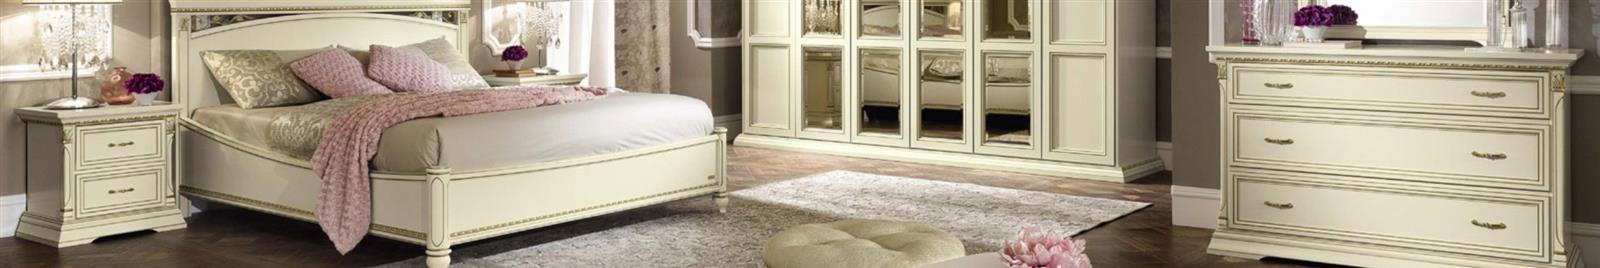 Treviso Night White Ash Range - Italian Bedroom Furniture